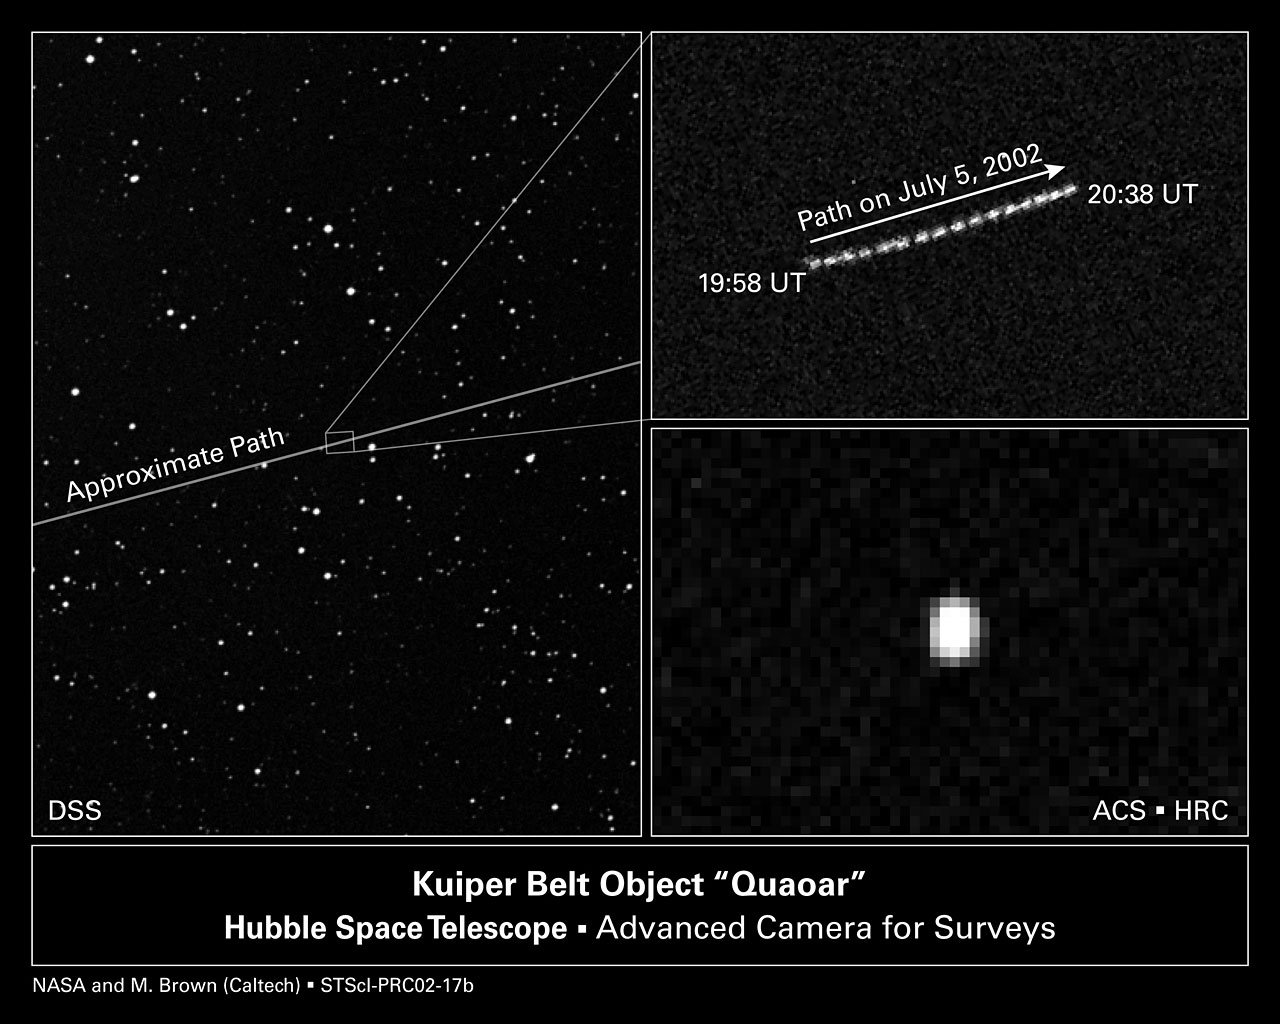 Acs Image Of Kbo Quaoar Esa Hubble